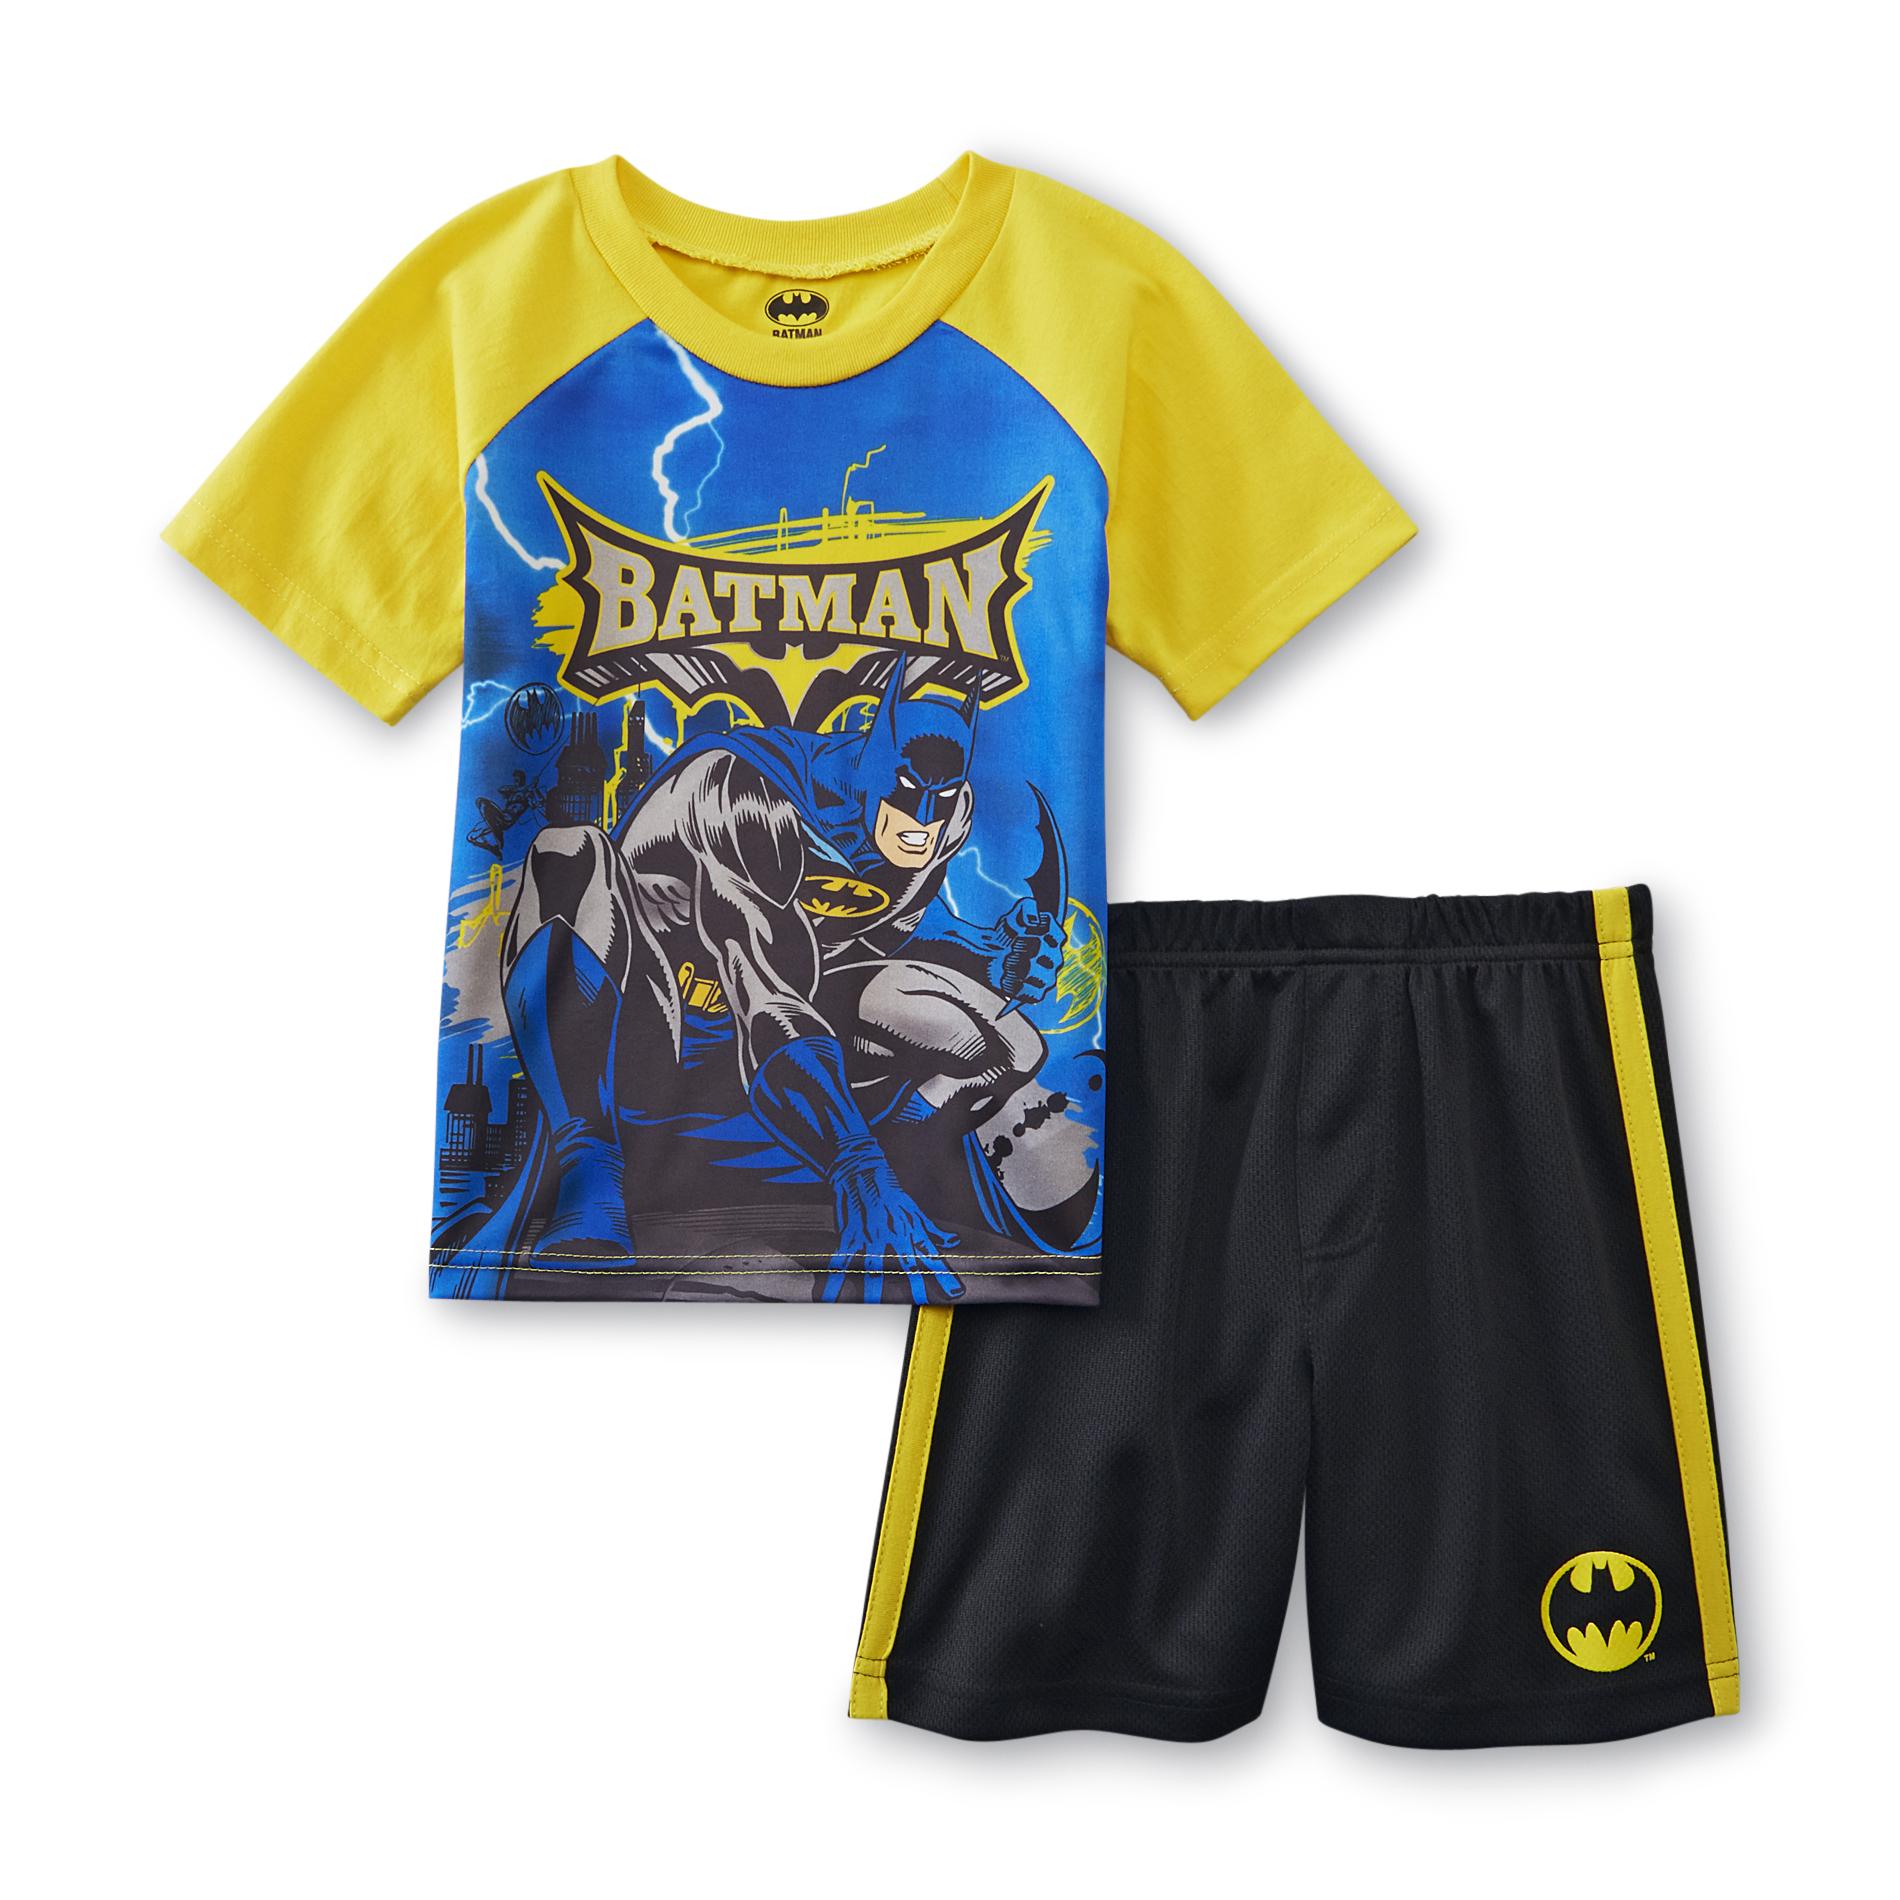 DC Comics Batman Toddler Boy's Graphic T-Shirt & Shorts